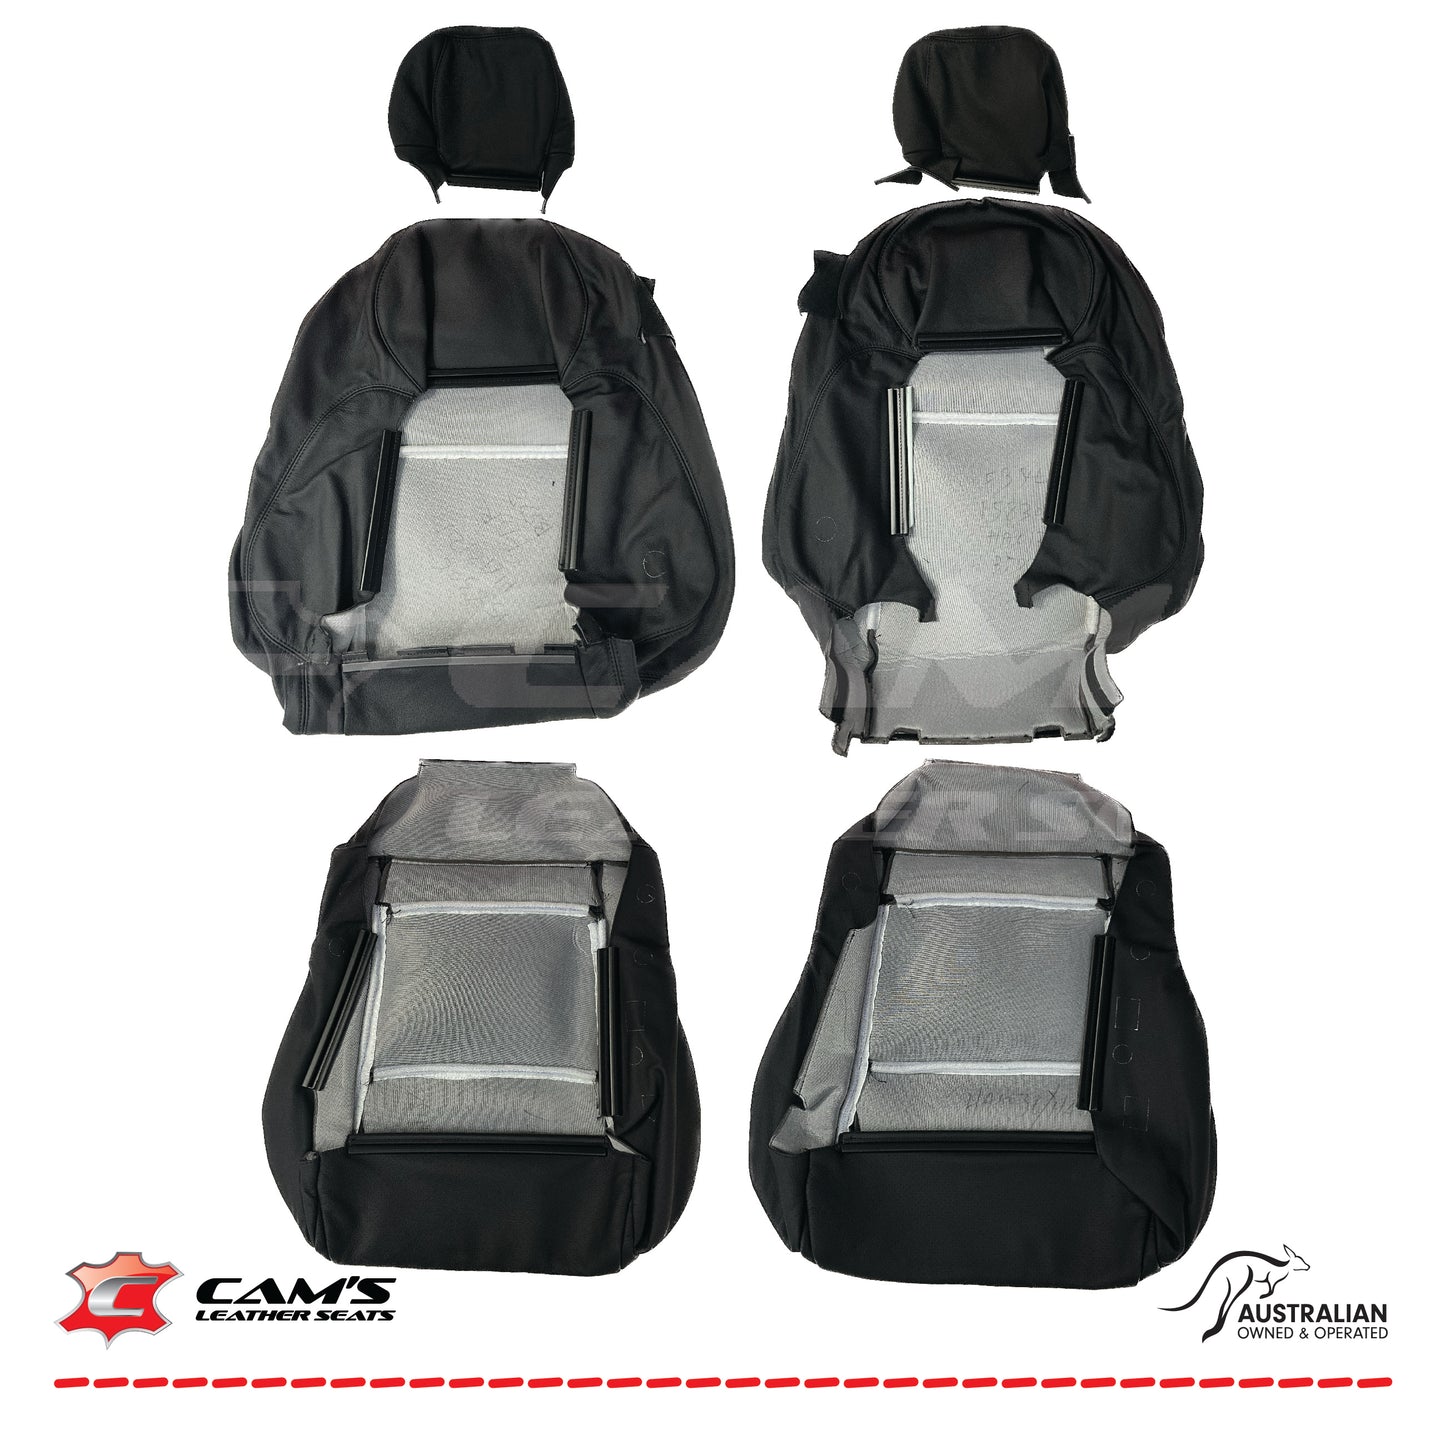 LEATHER SEATS TRIM KIT FOR HOLDEN MONARO VZ BLACK ANTHRACITE 2 FRONT SEATS